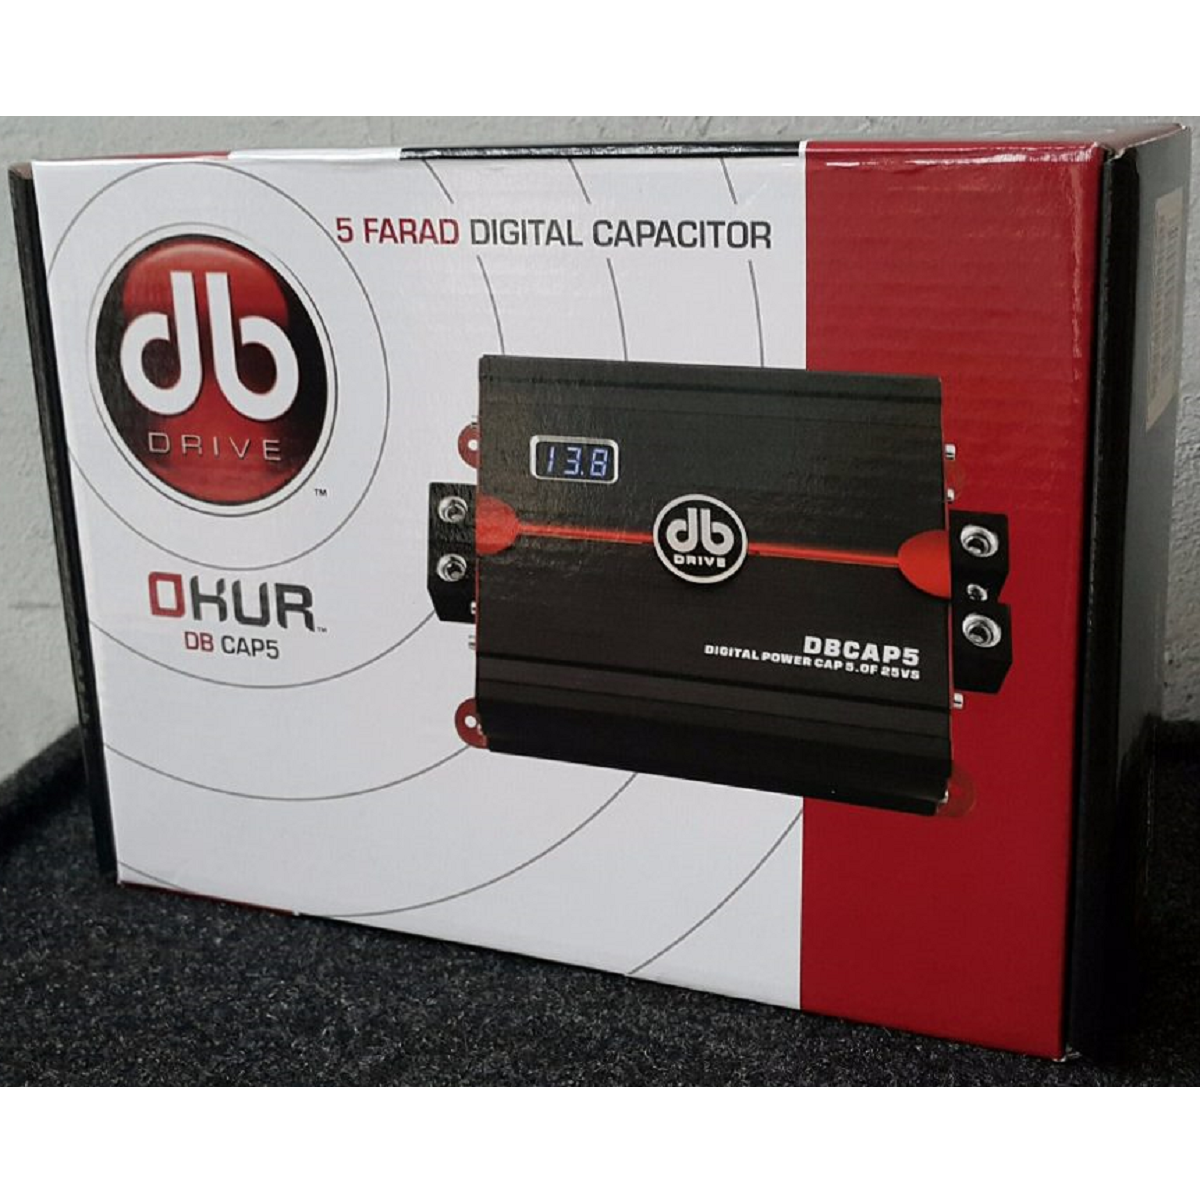 Capacitor Digital DB Drive DBCAP5 5 Faradios 12-24 V DC Okur Series Tipo Amplificador